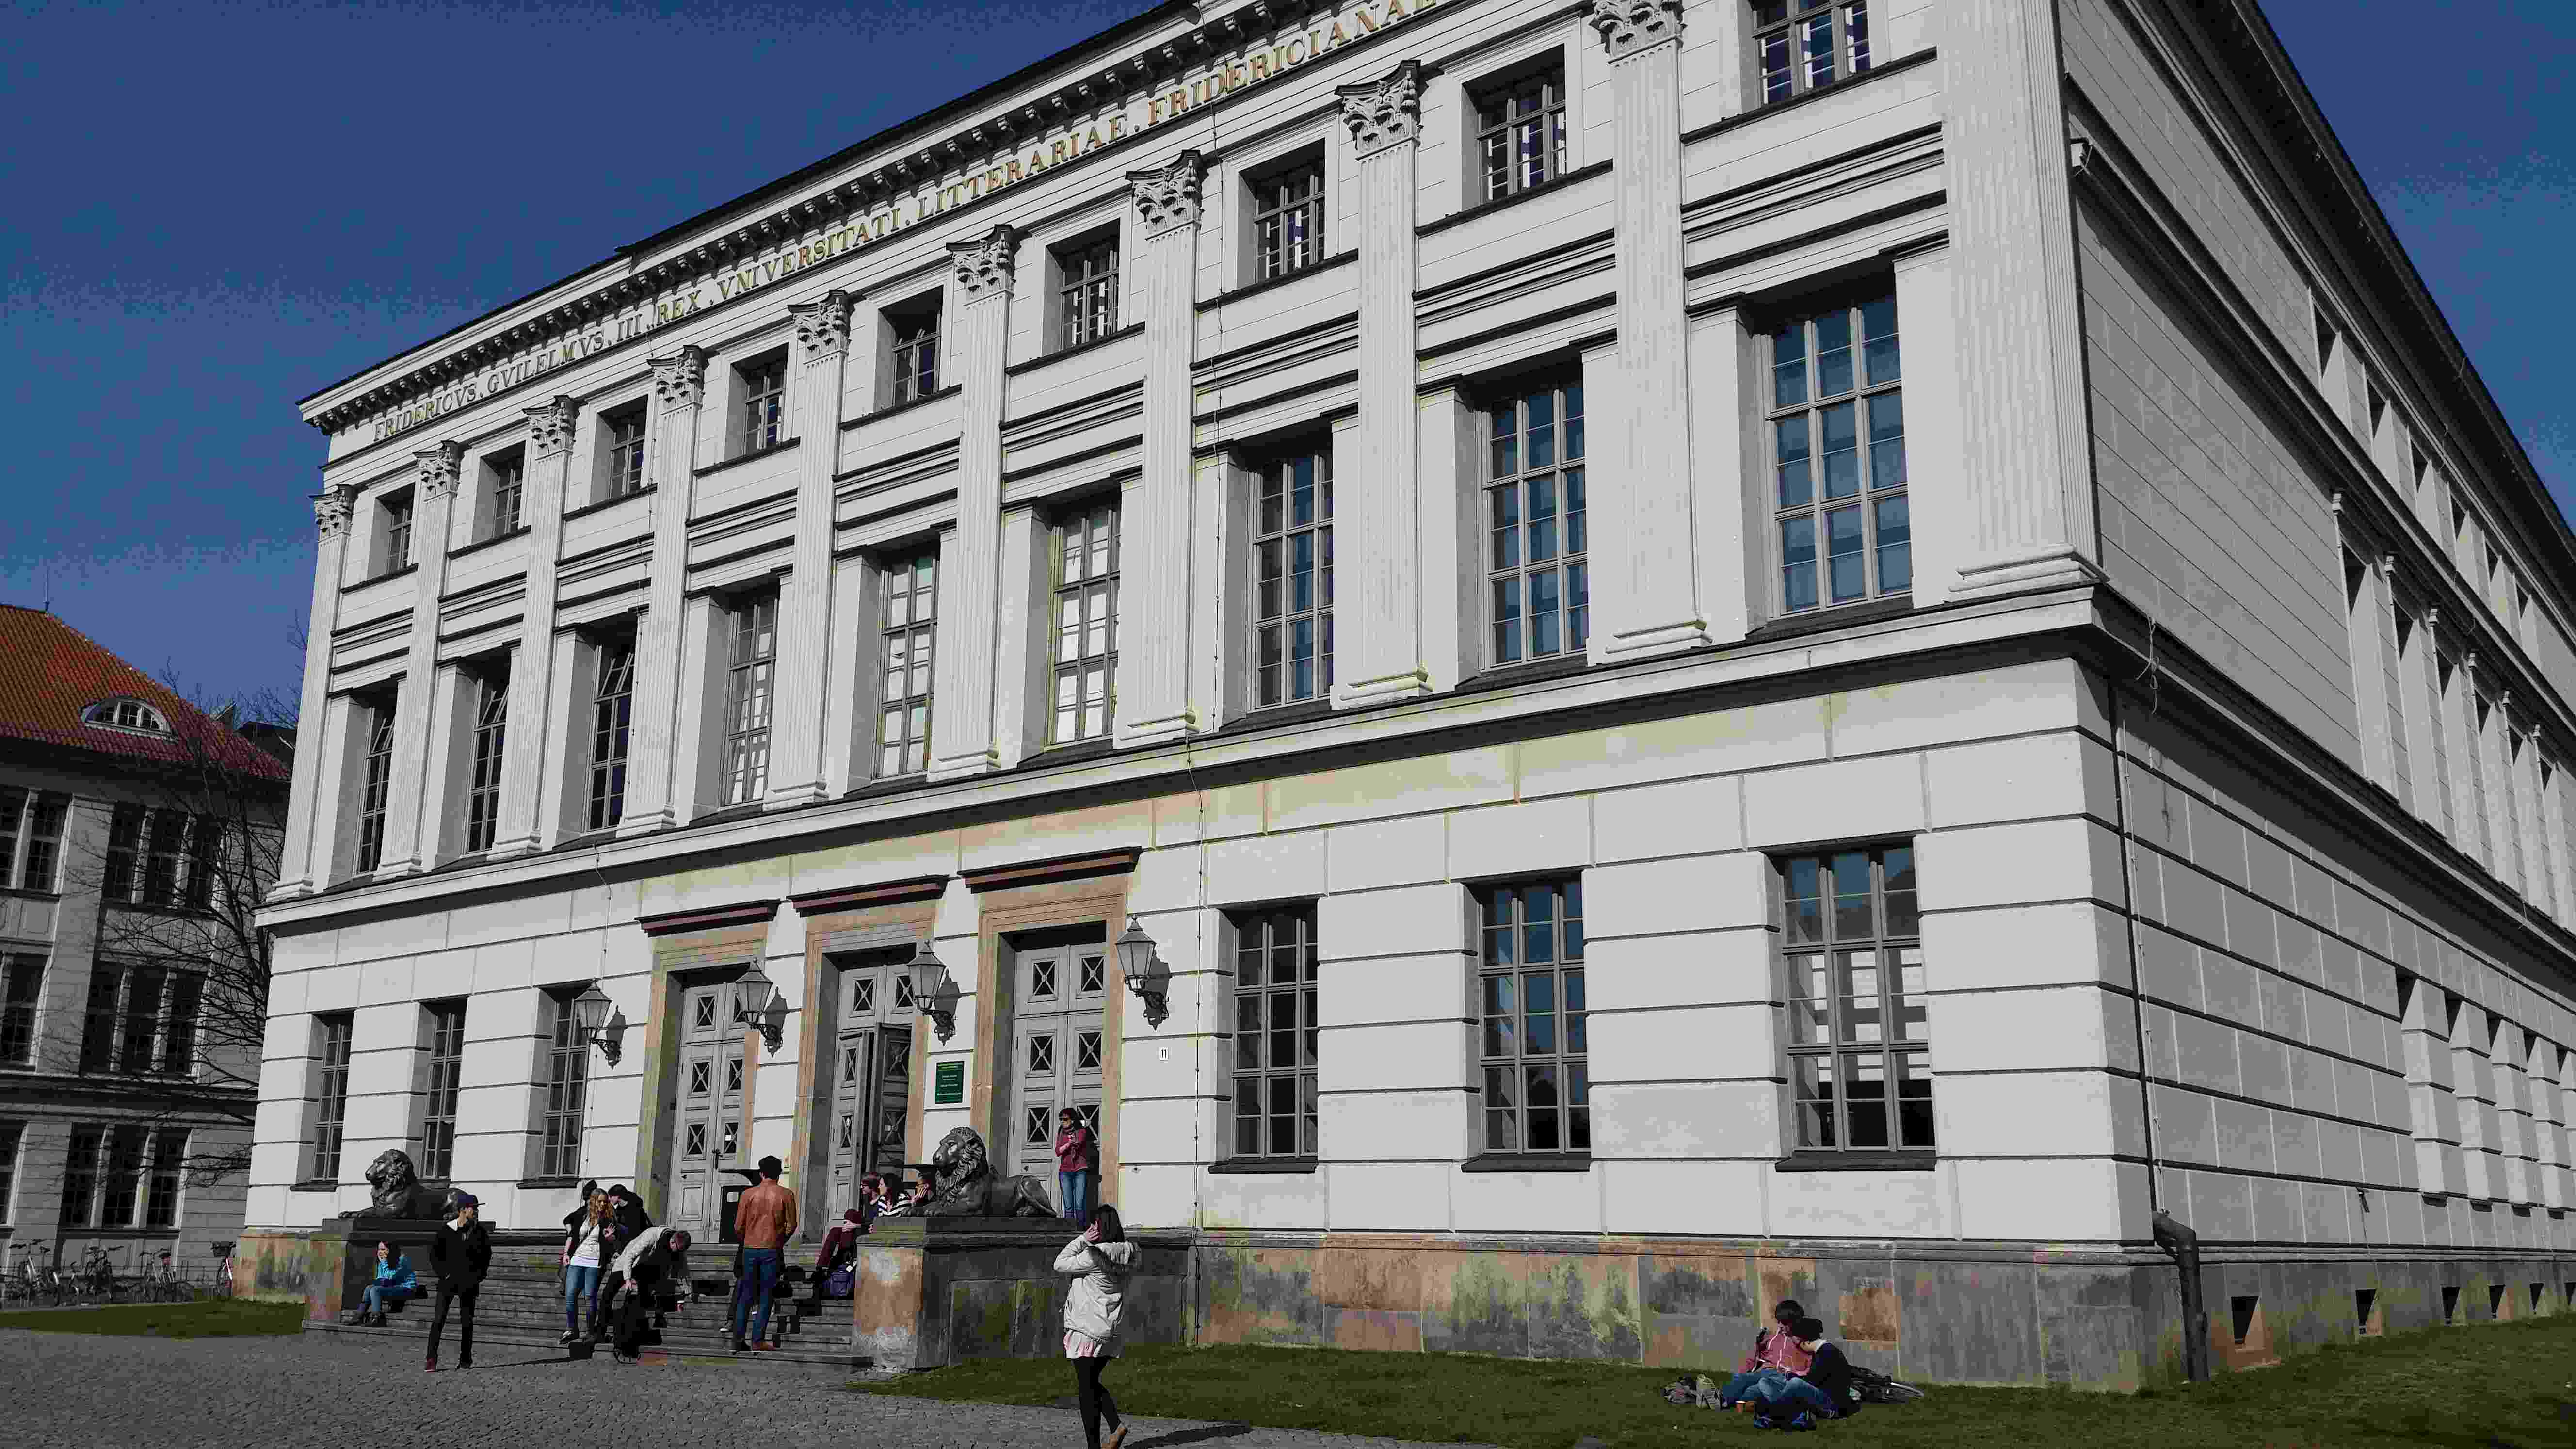 Löwengebäude of the university